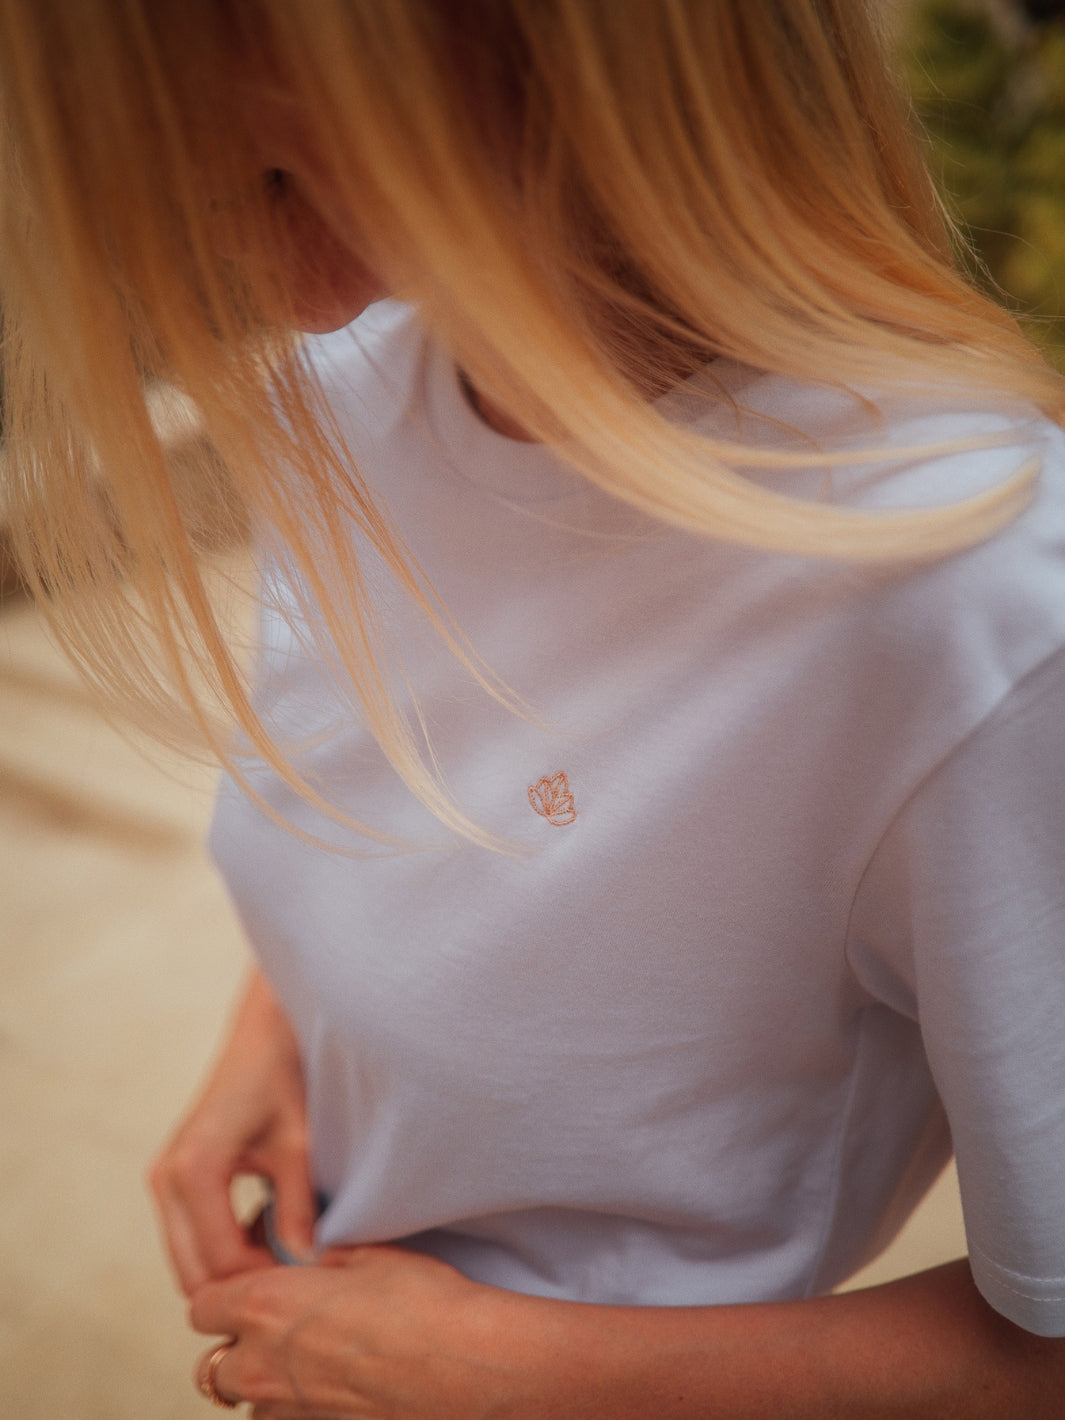 Cape dámské tričko z biobavlny s kulatým výstřihem bílé detail ženy s blonďatými vlasy